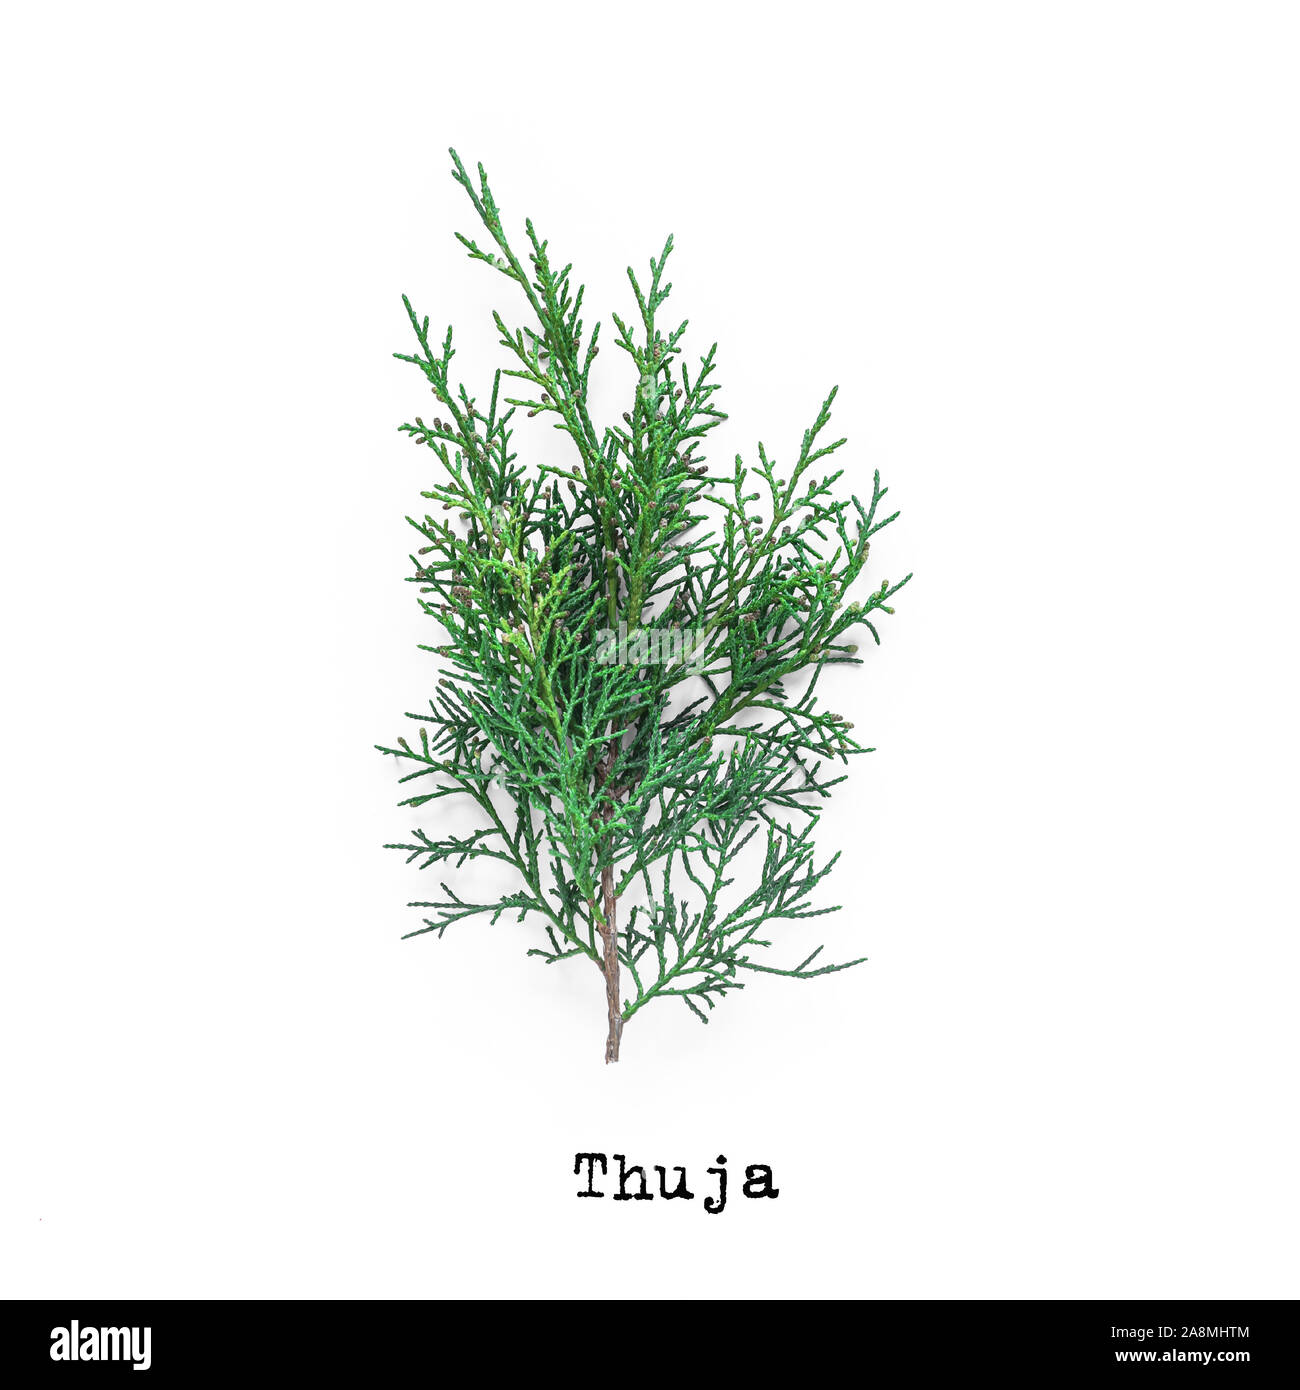 Thuja evergreen plant branch on white background. Stock Photo